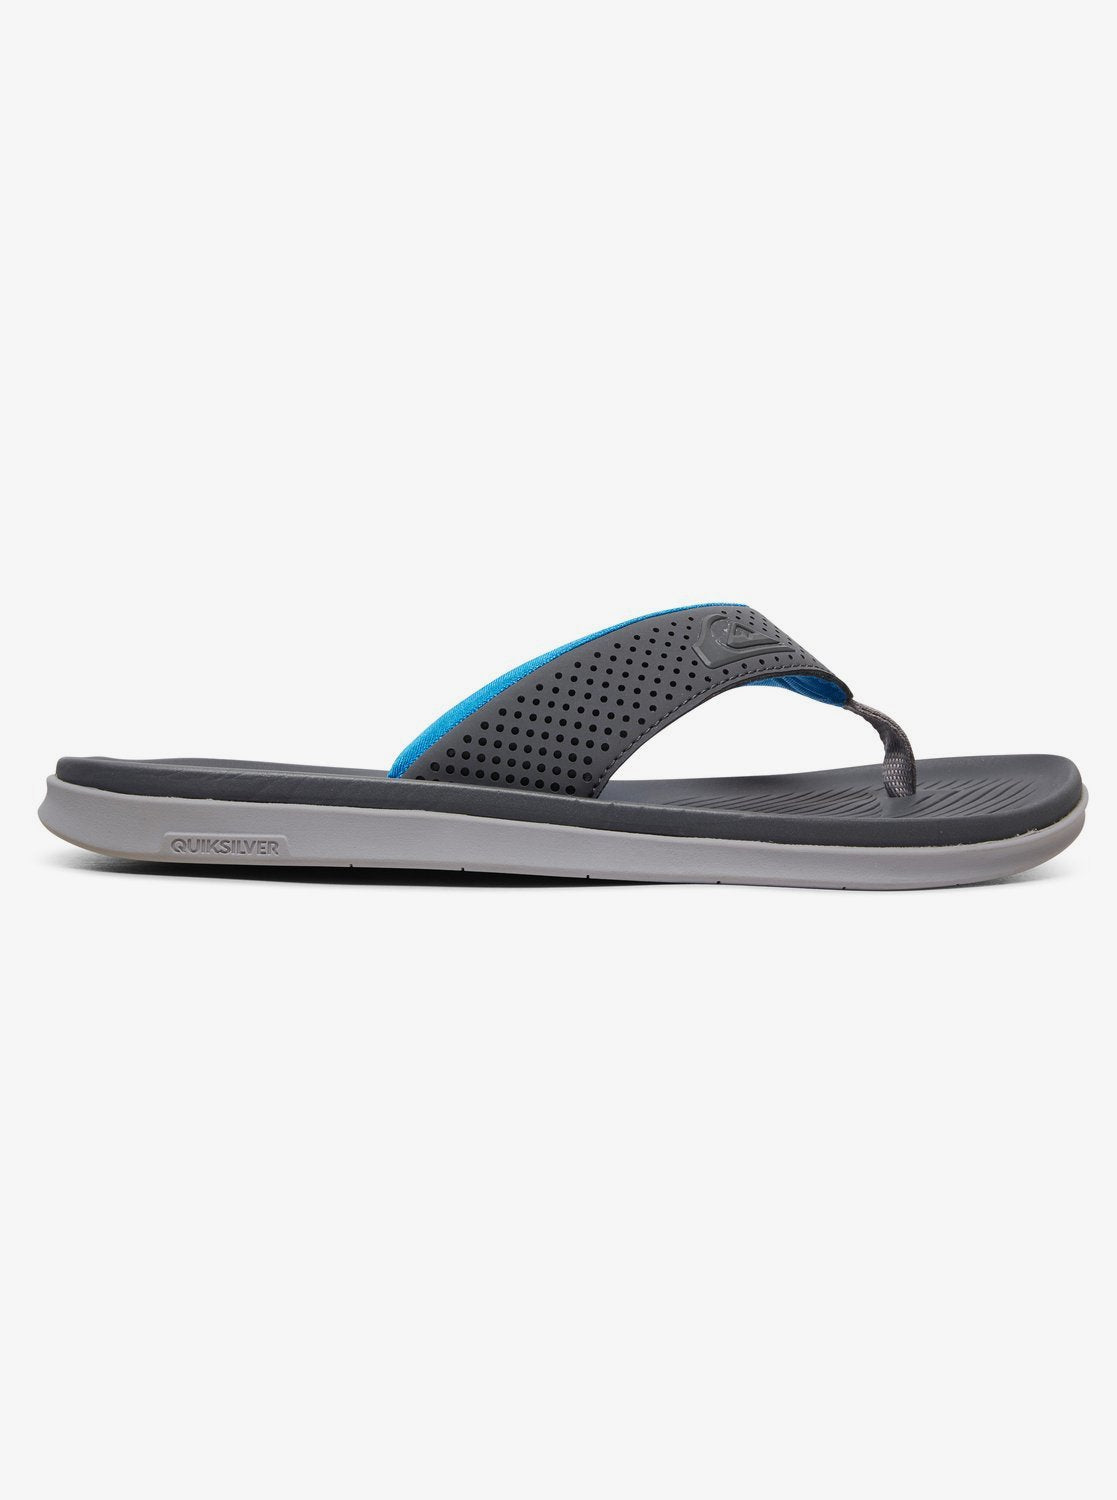 Quiksilver Men's Haleiwa Plus Flip Flops Sandals Grey Gray Blue Side 1